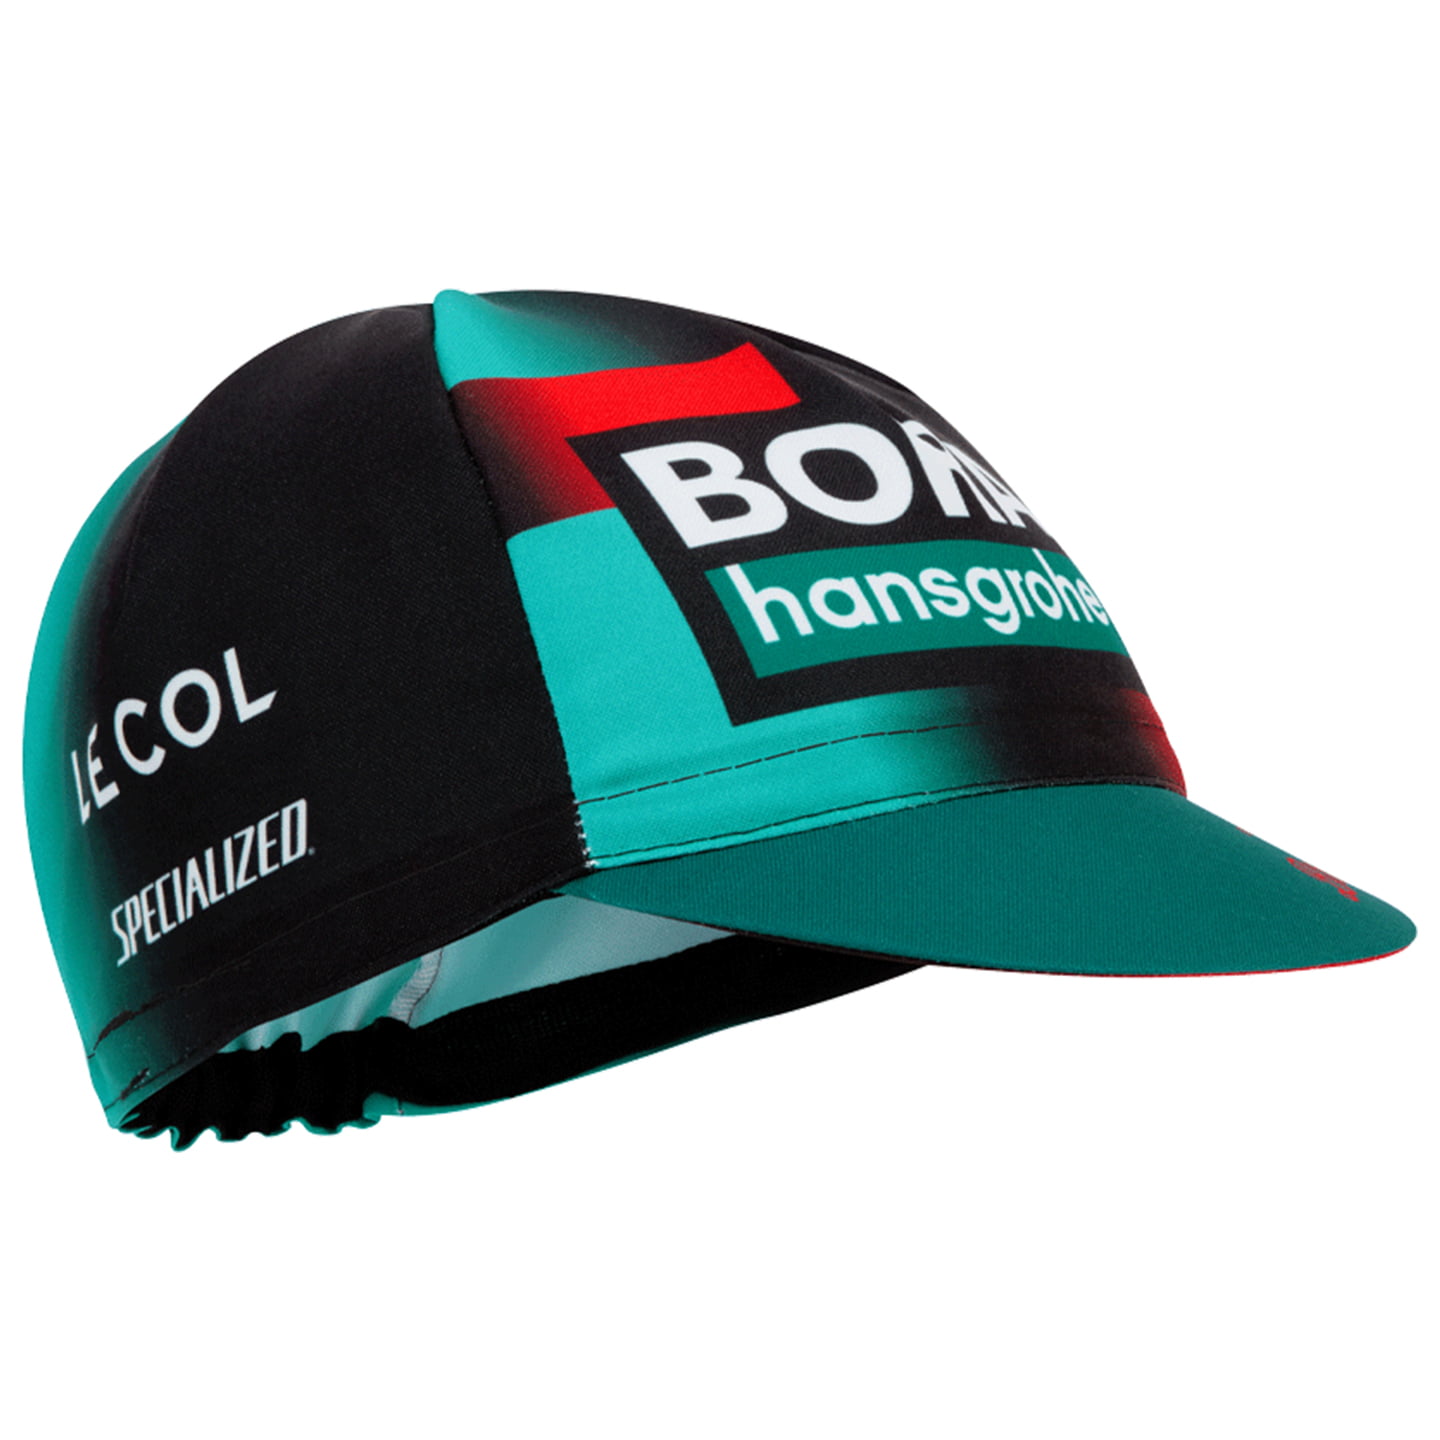 BORA-hansgrohe 2023 Cycling Cap, for men, Cycle cap, Cycling clothing